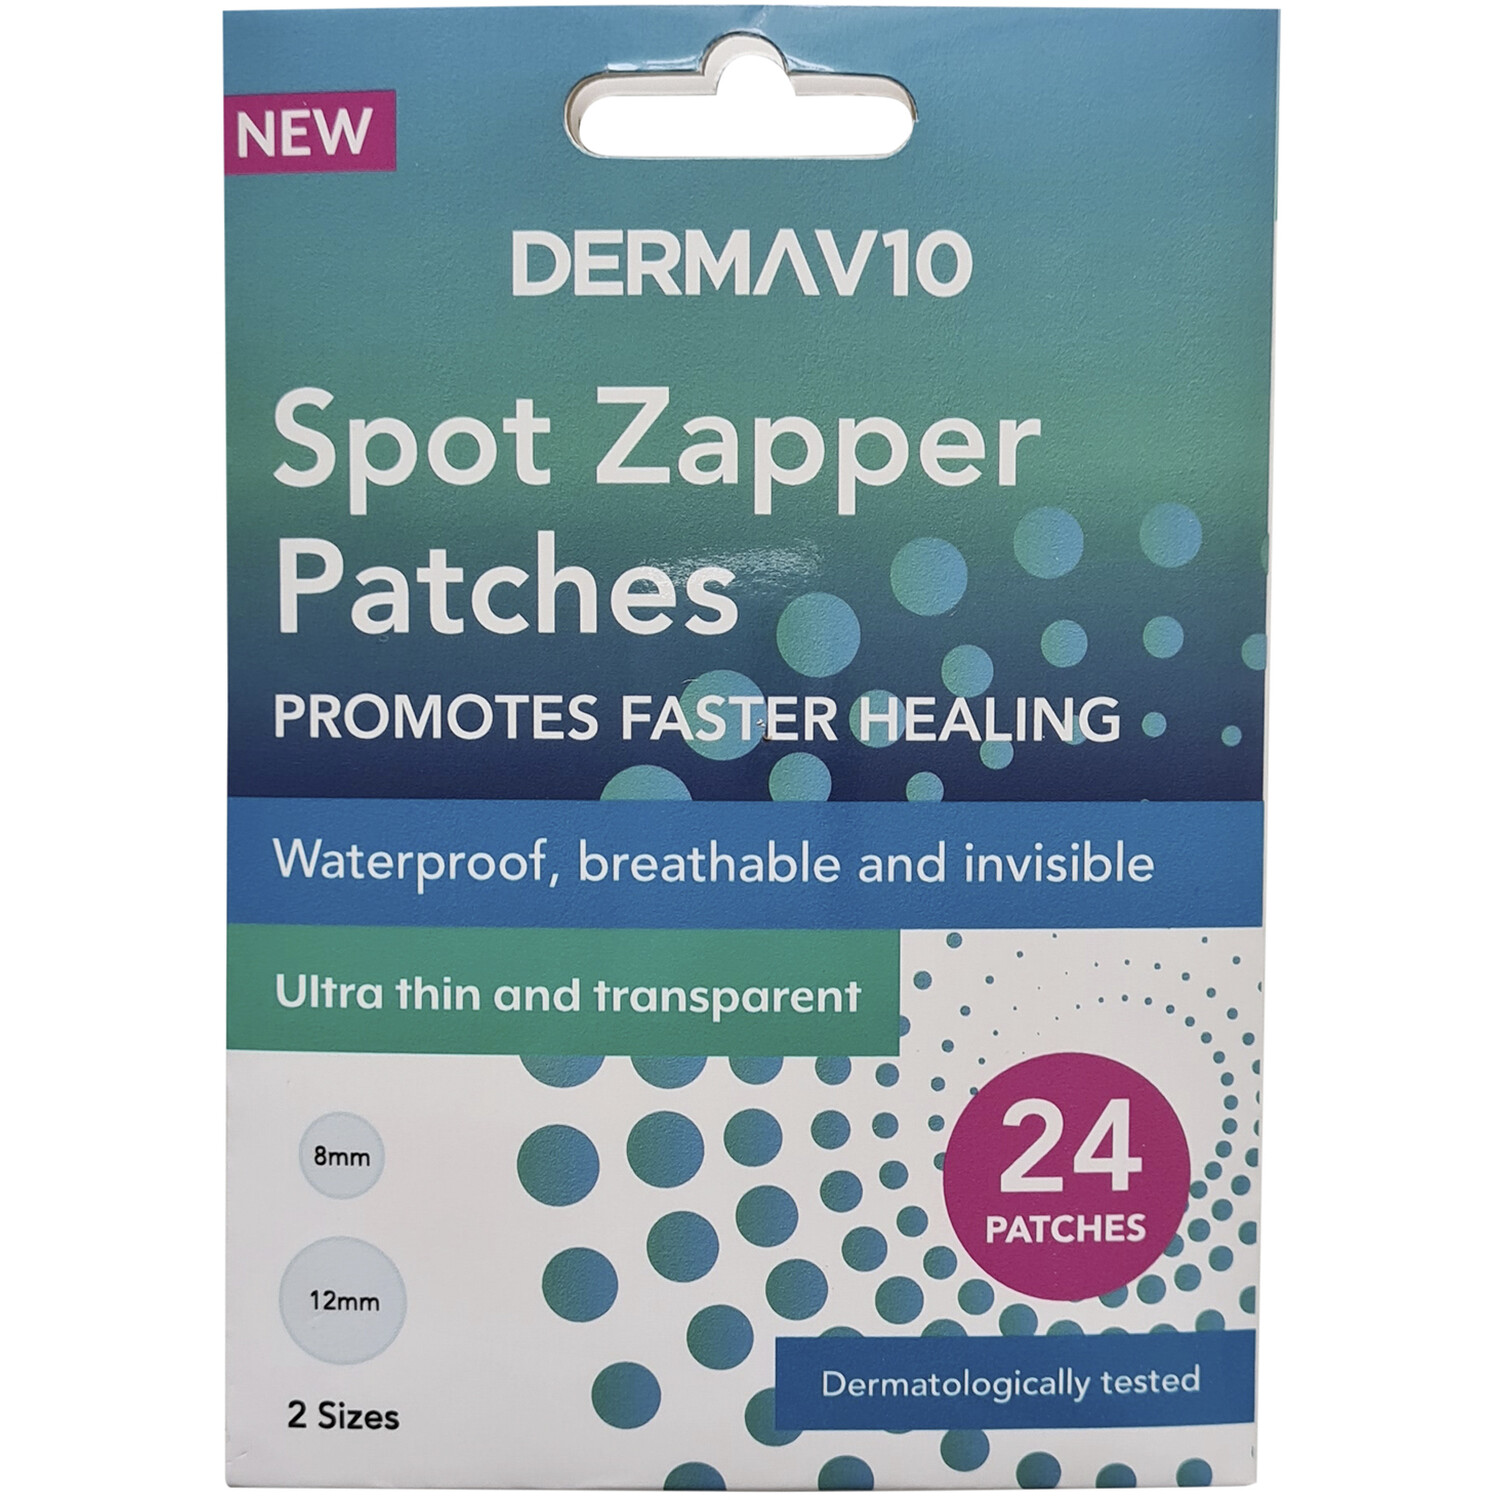 DermaV10 Spot Zapper Patches 24 Pack Image